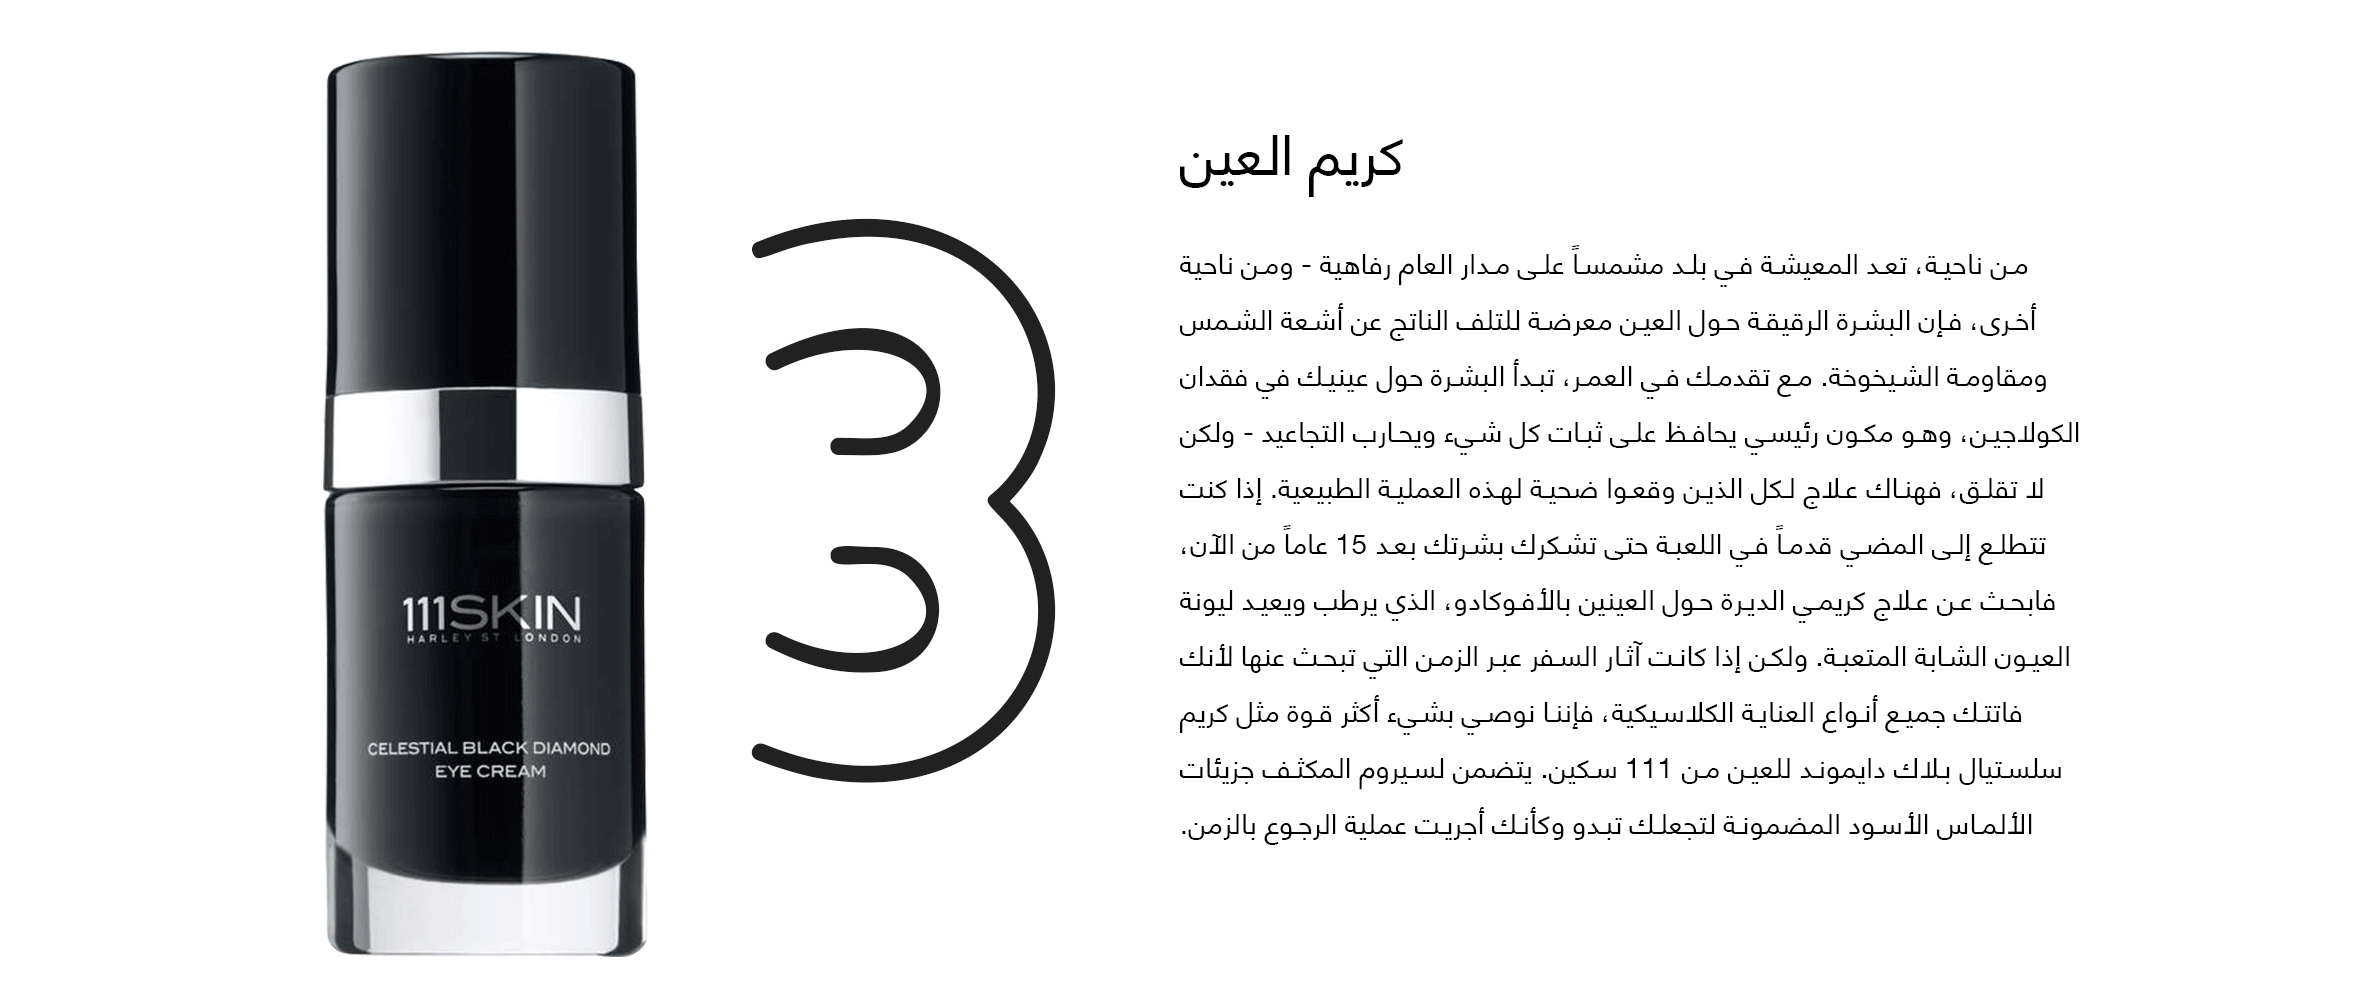 Element-3-web-Arabic